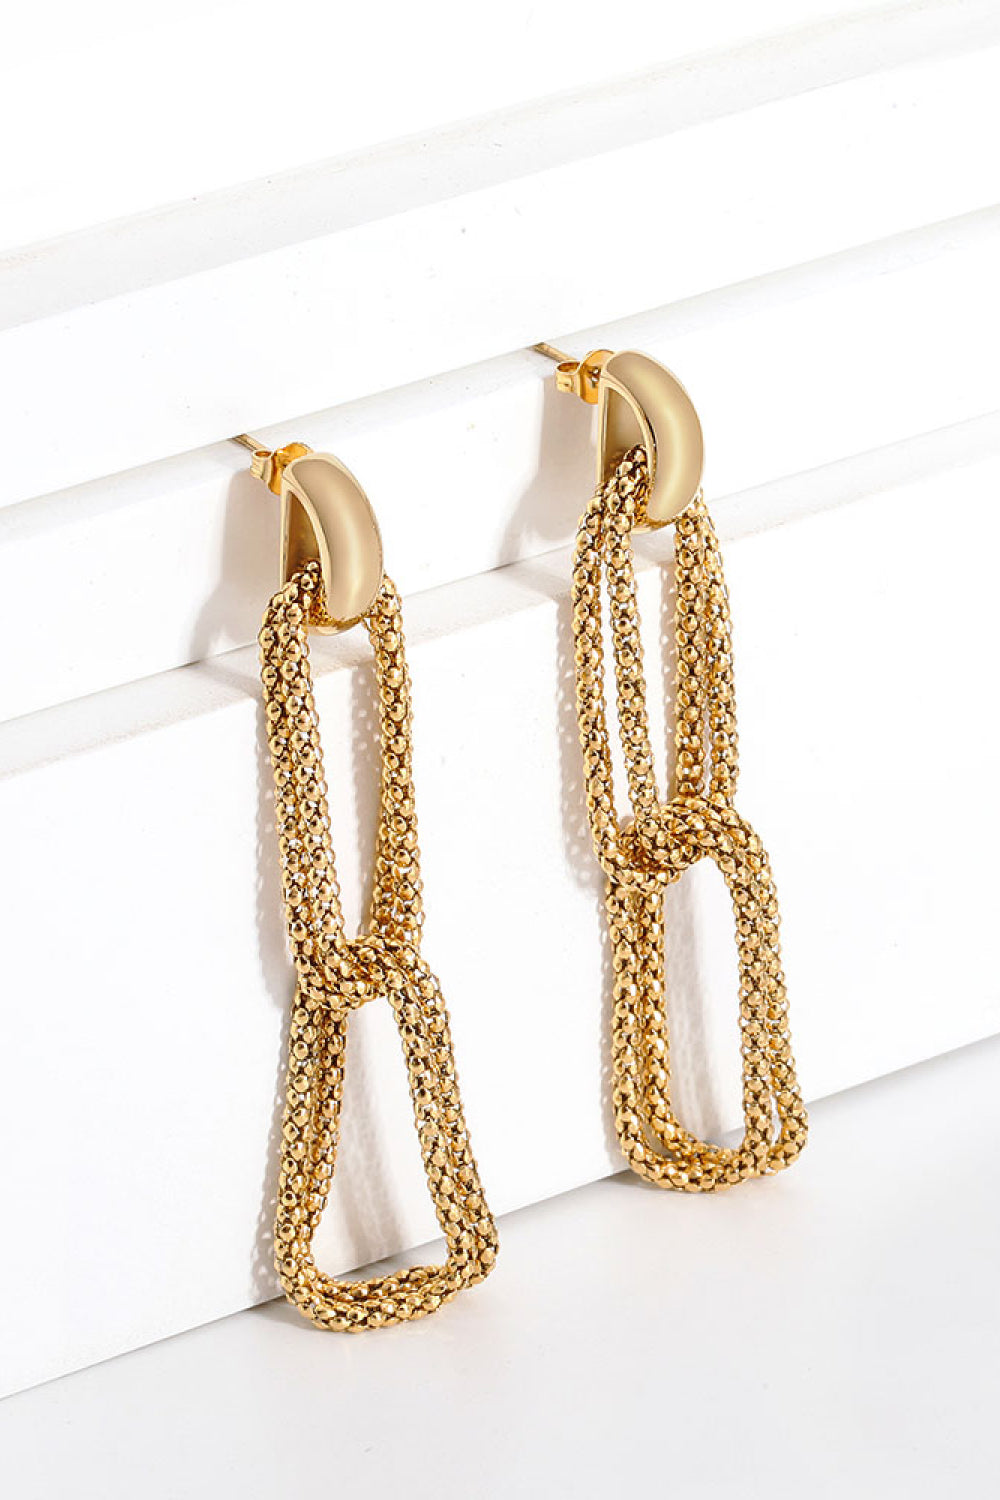 Gold-Plated D-Shaped Drop Earrings - Earrings - FITGGINS